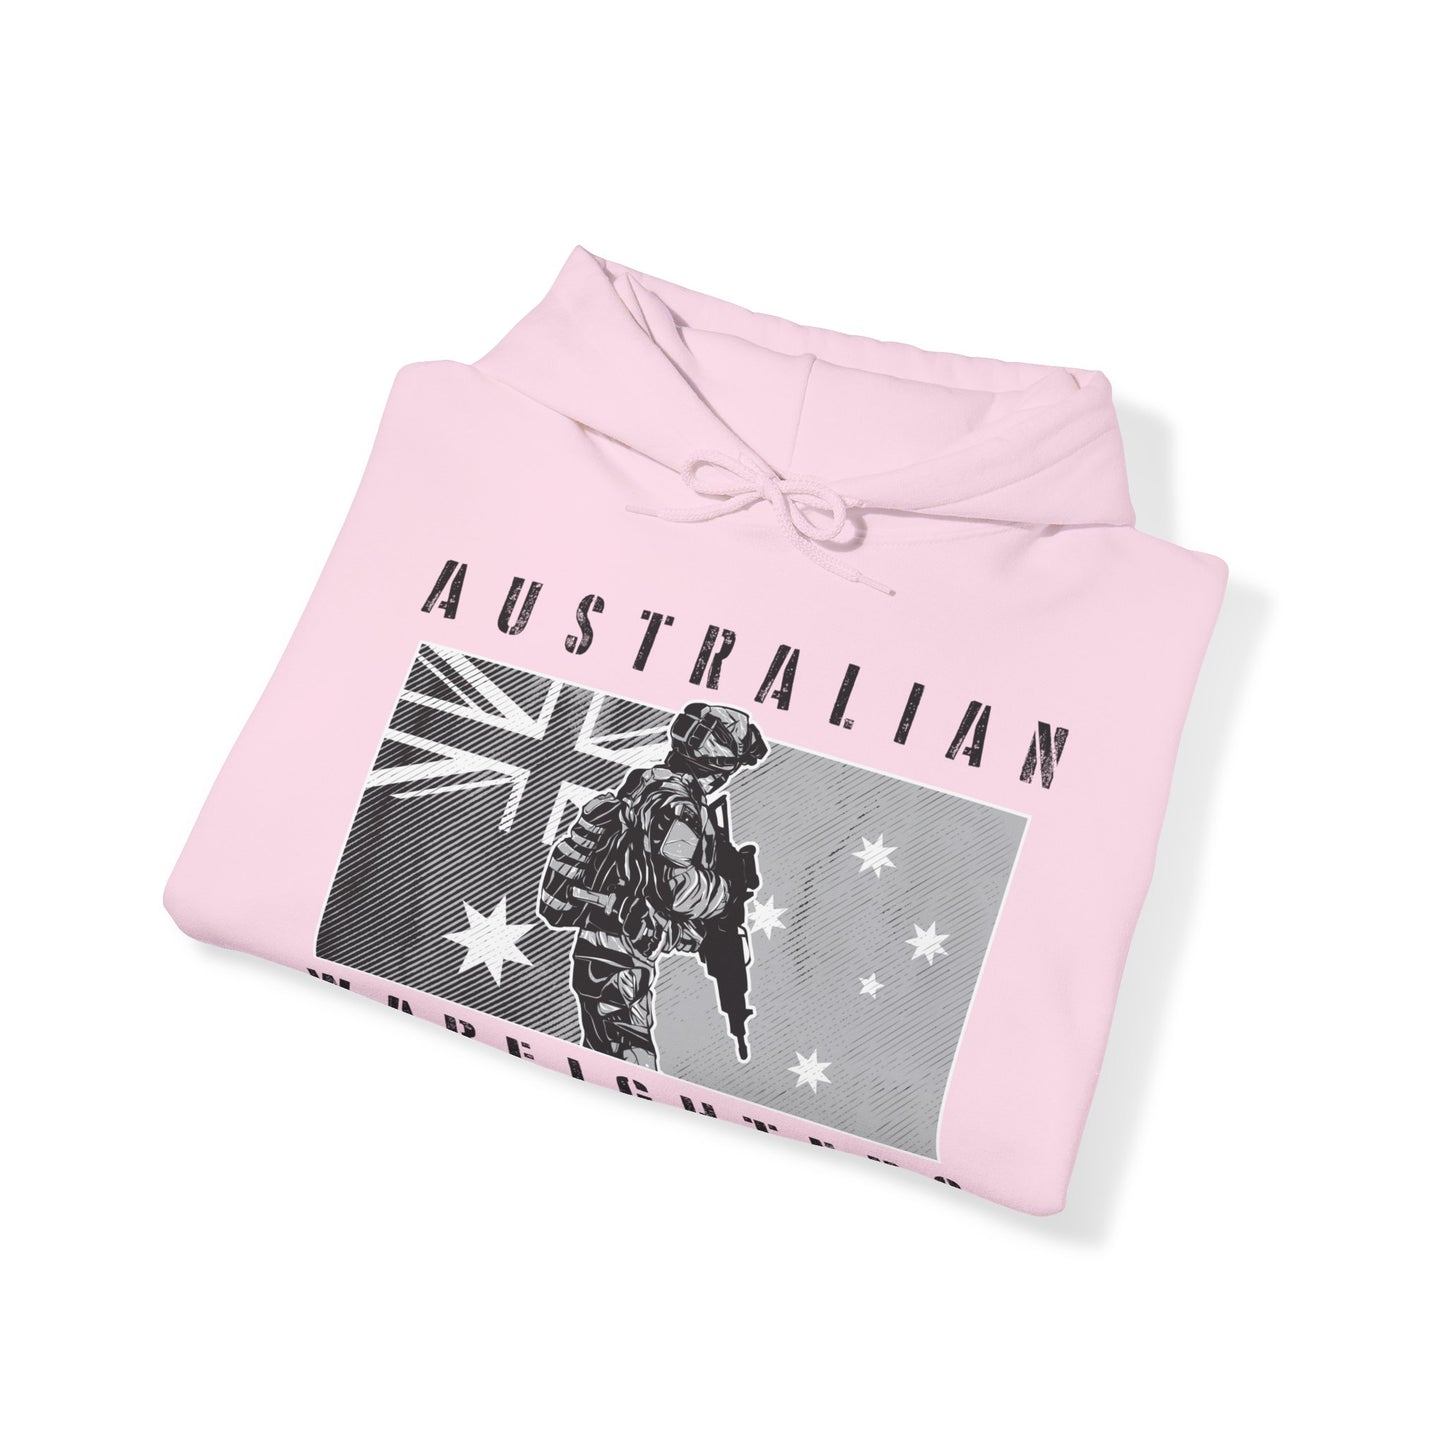 Australian Warfighters Hooded Sweatshirt